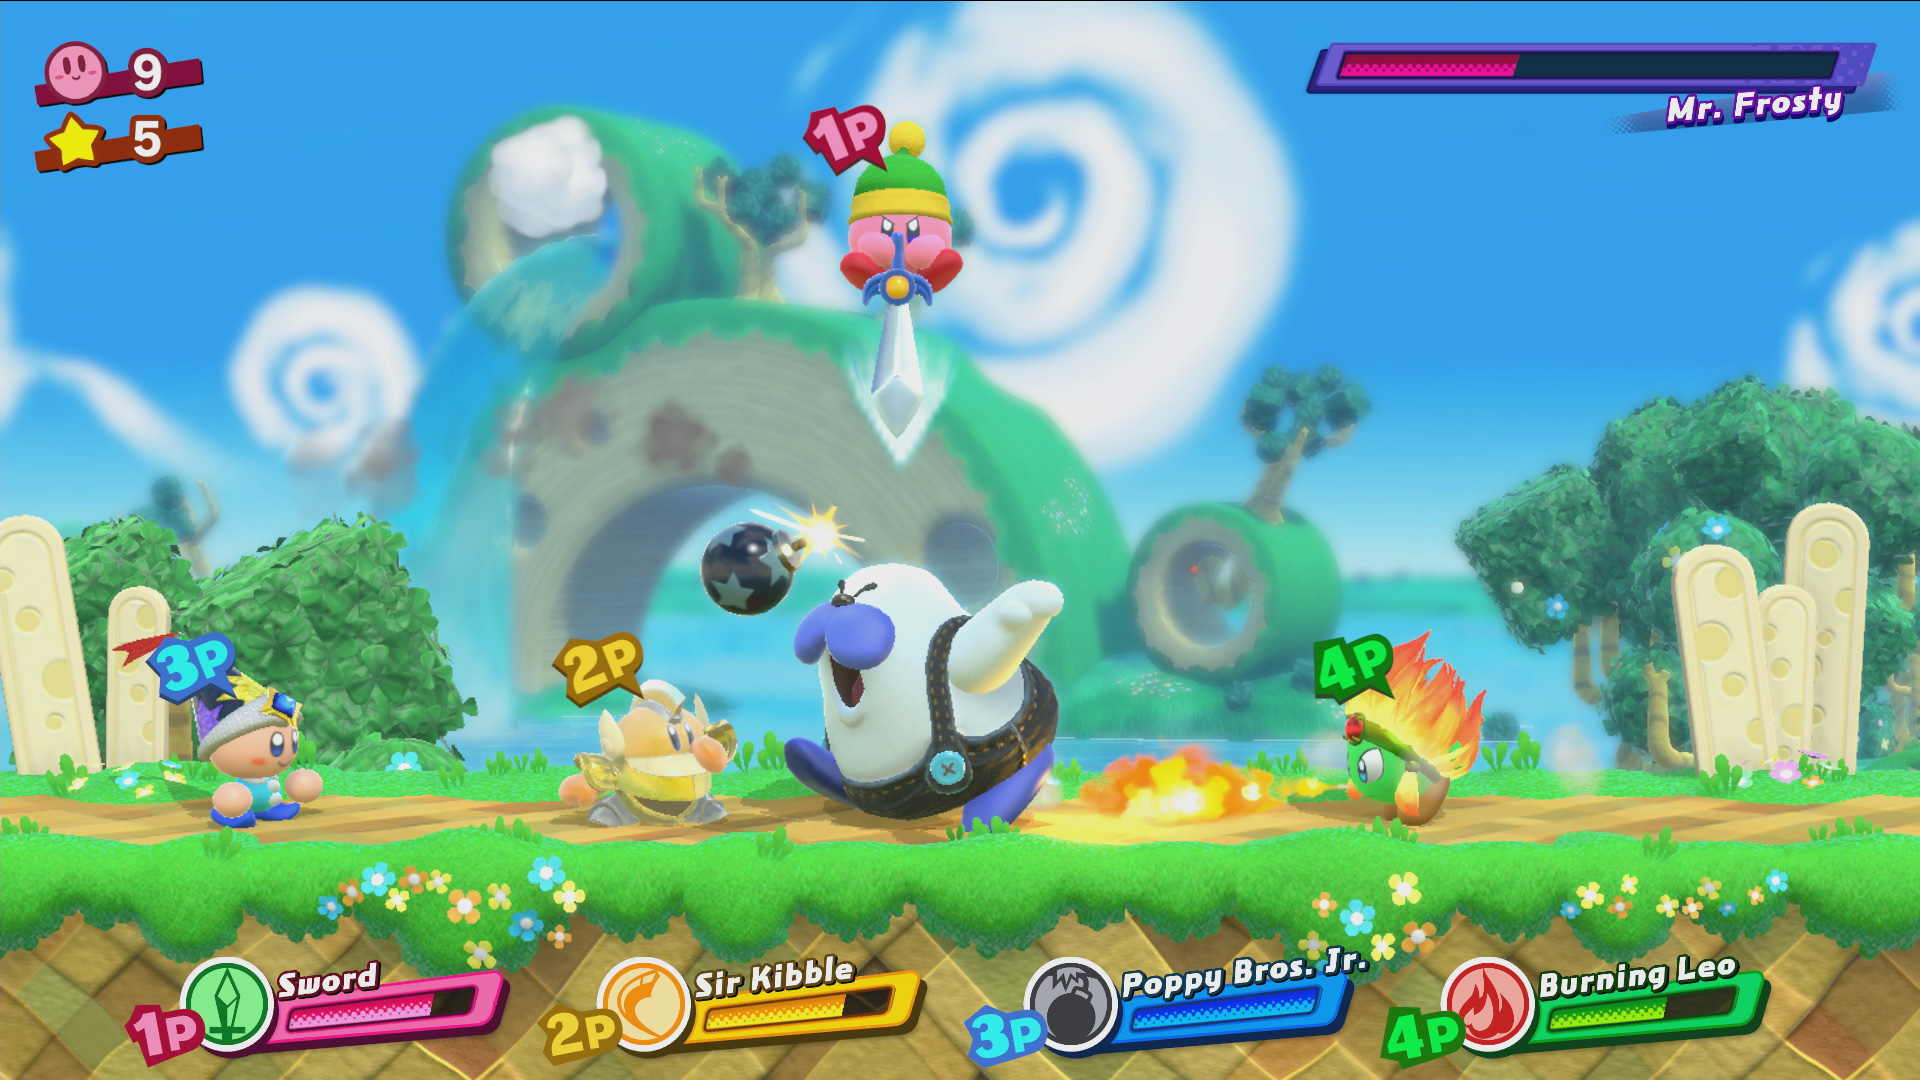 Kirby Star Allies - Fighting Mr. Frosty with Four Players - Nintenfan